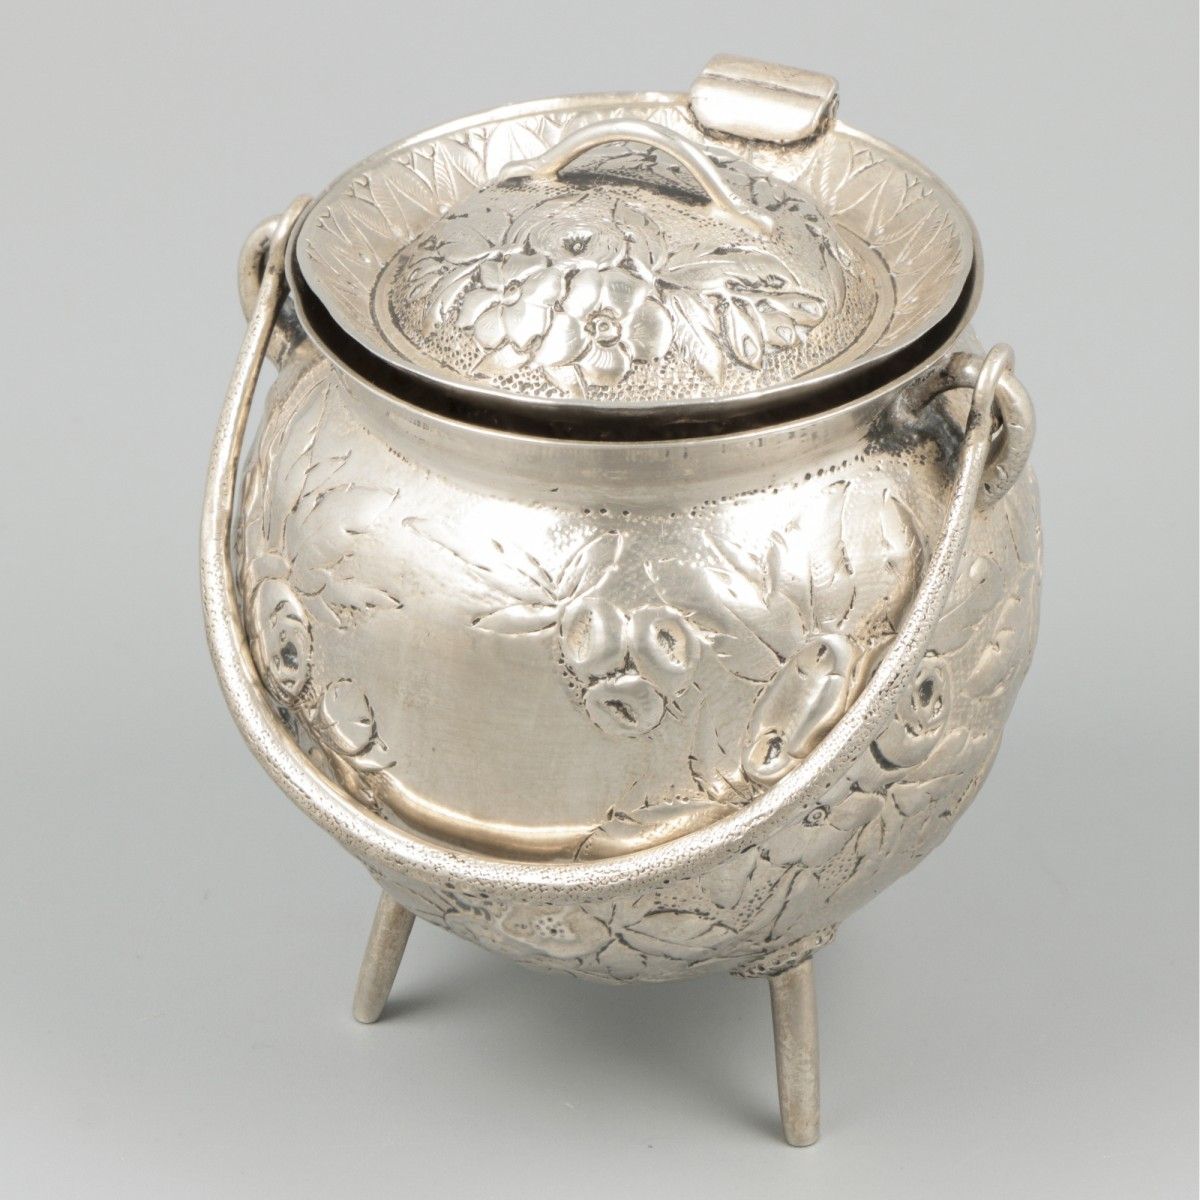 Miniature cooking pot silver. Modelo de olla grande, lleno de detalles. Mediados&hellip;